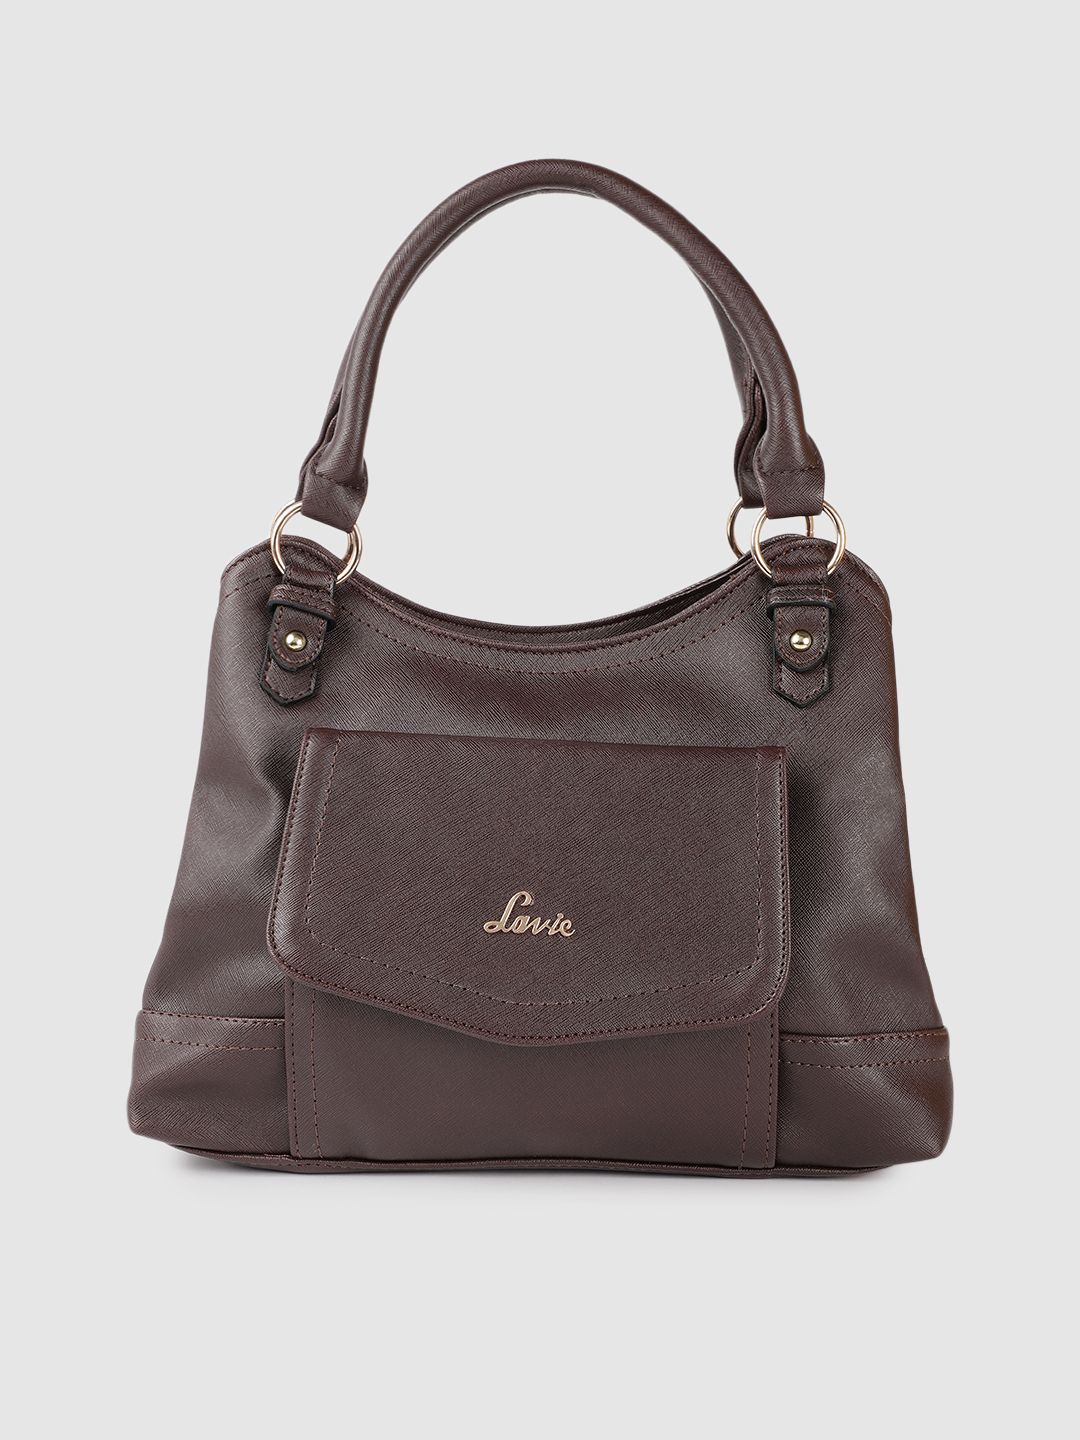 Lavie Brown Solid Handheld Bag Price in India